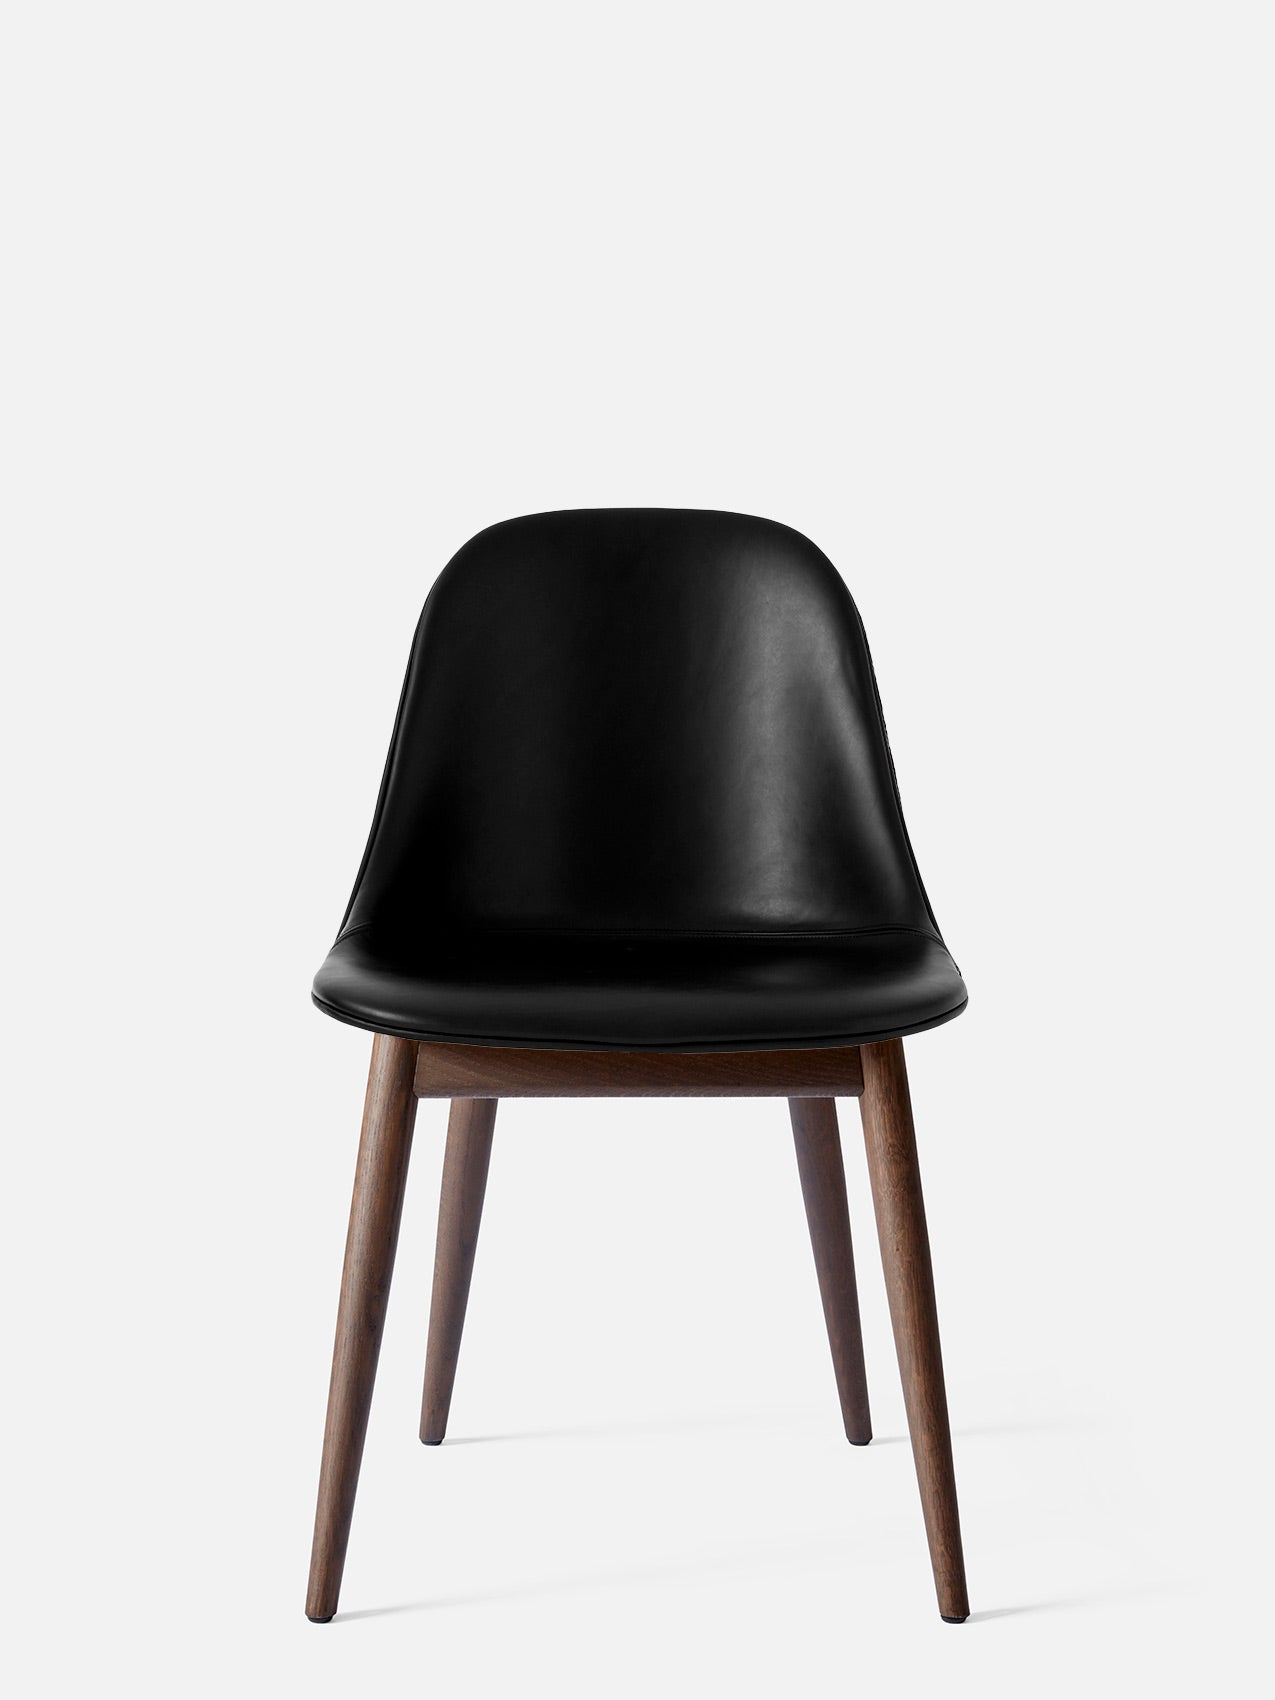 Harbour Side Chair, Upholstered-Chair-Norm Architects-Dining Height (Seat 17.7in H)/Dark Oak-0842 Black/Dakar-menu-minimalist-modern-danish-design-home-decor